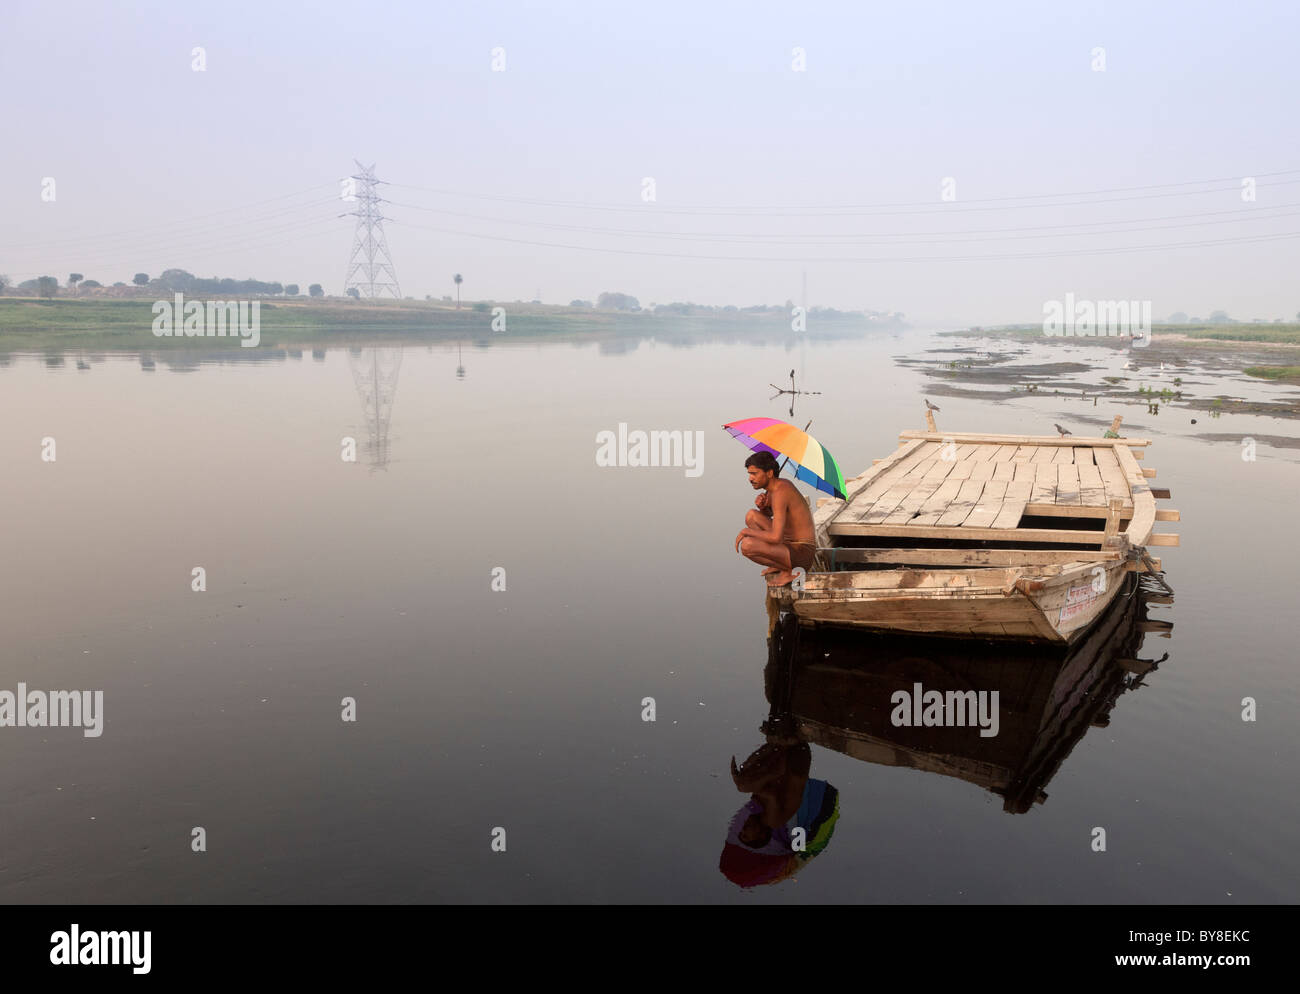 Indien, Agra, Uttar Pradesh Fischer am Boot mit bunten Regenschirm Stockfoto